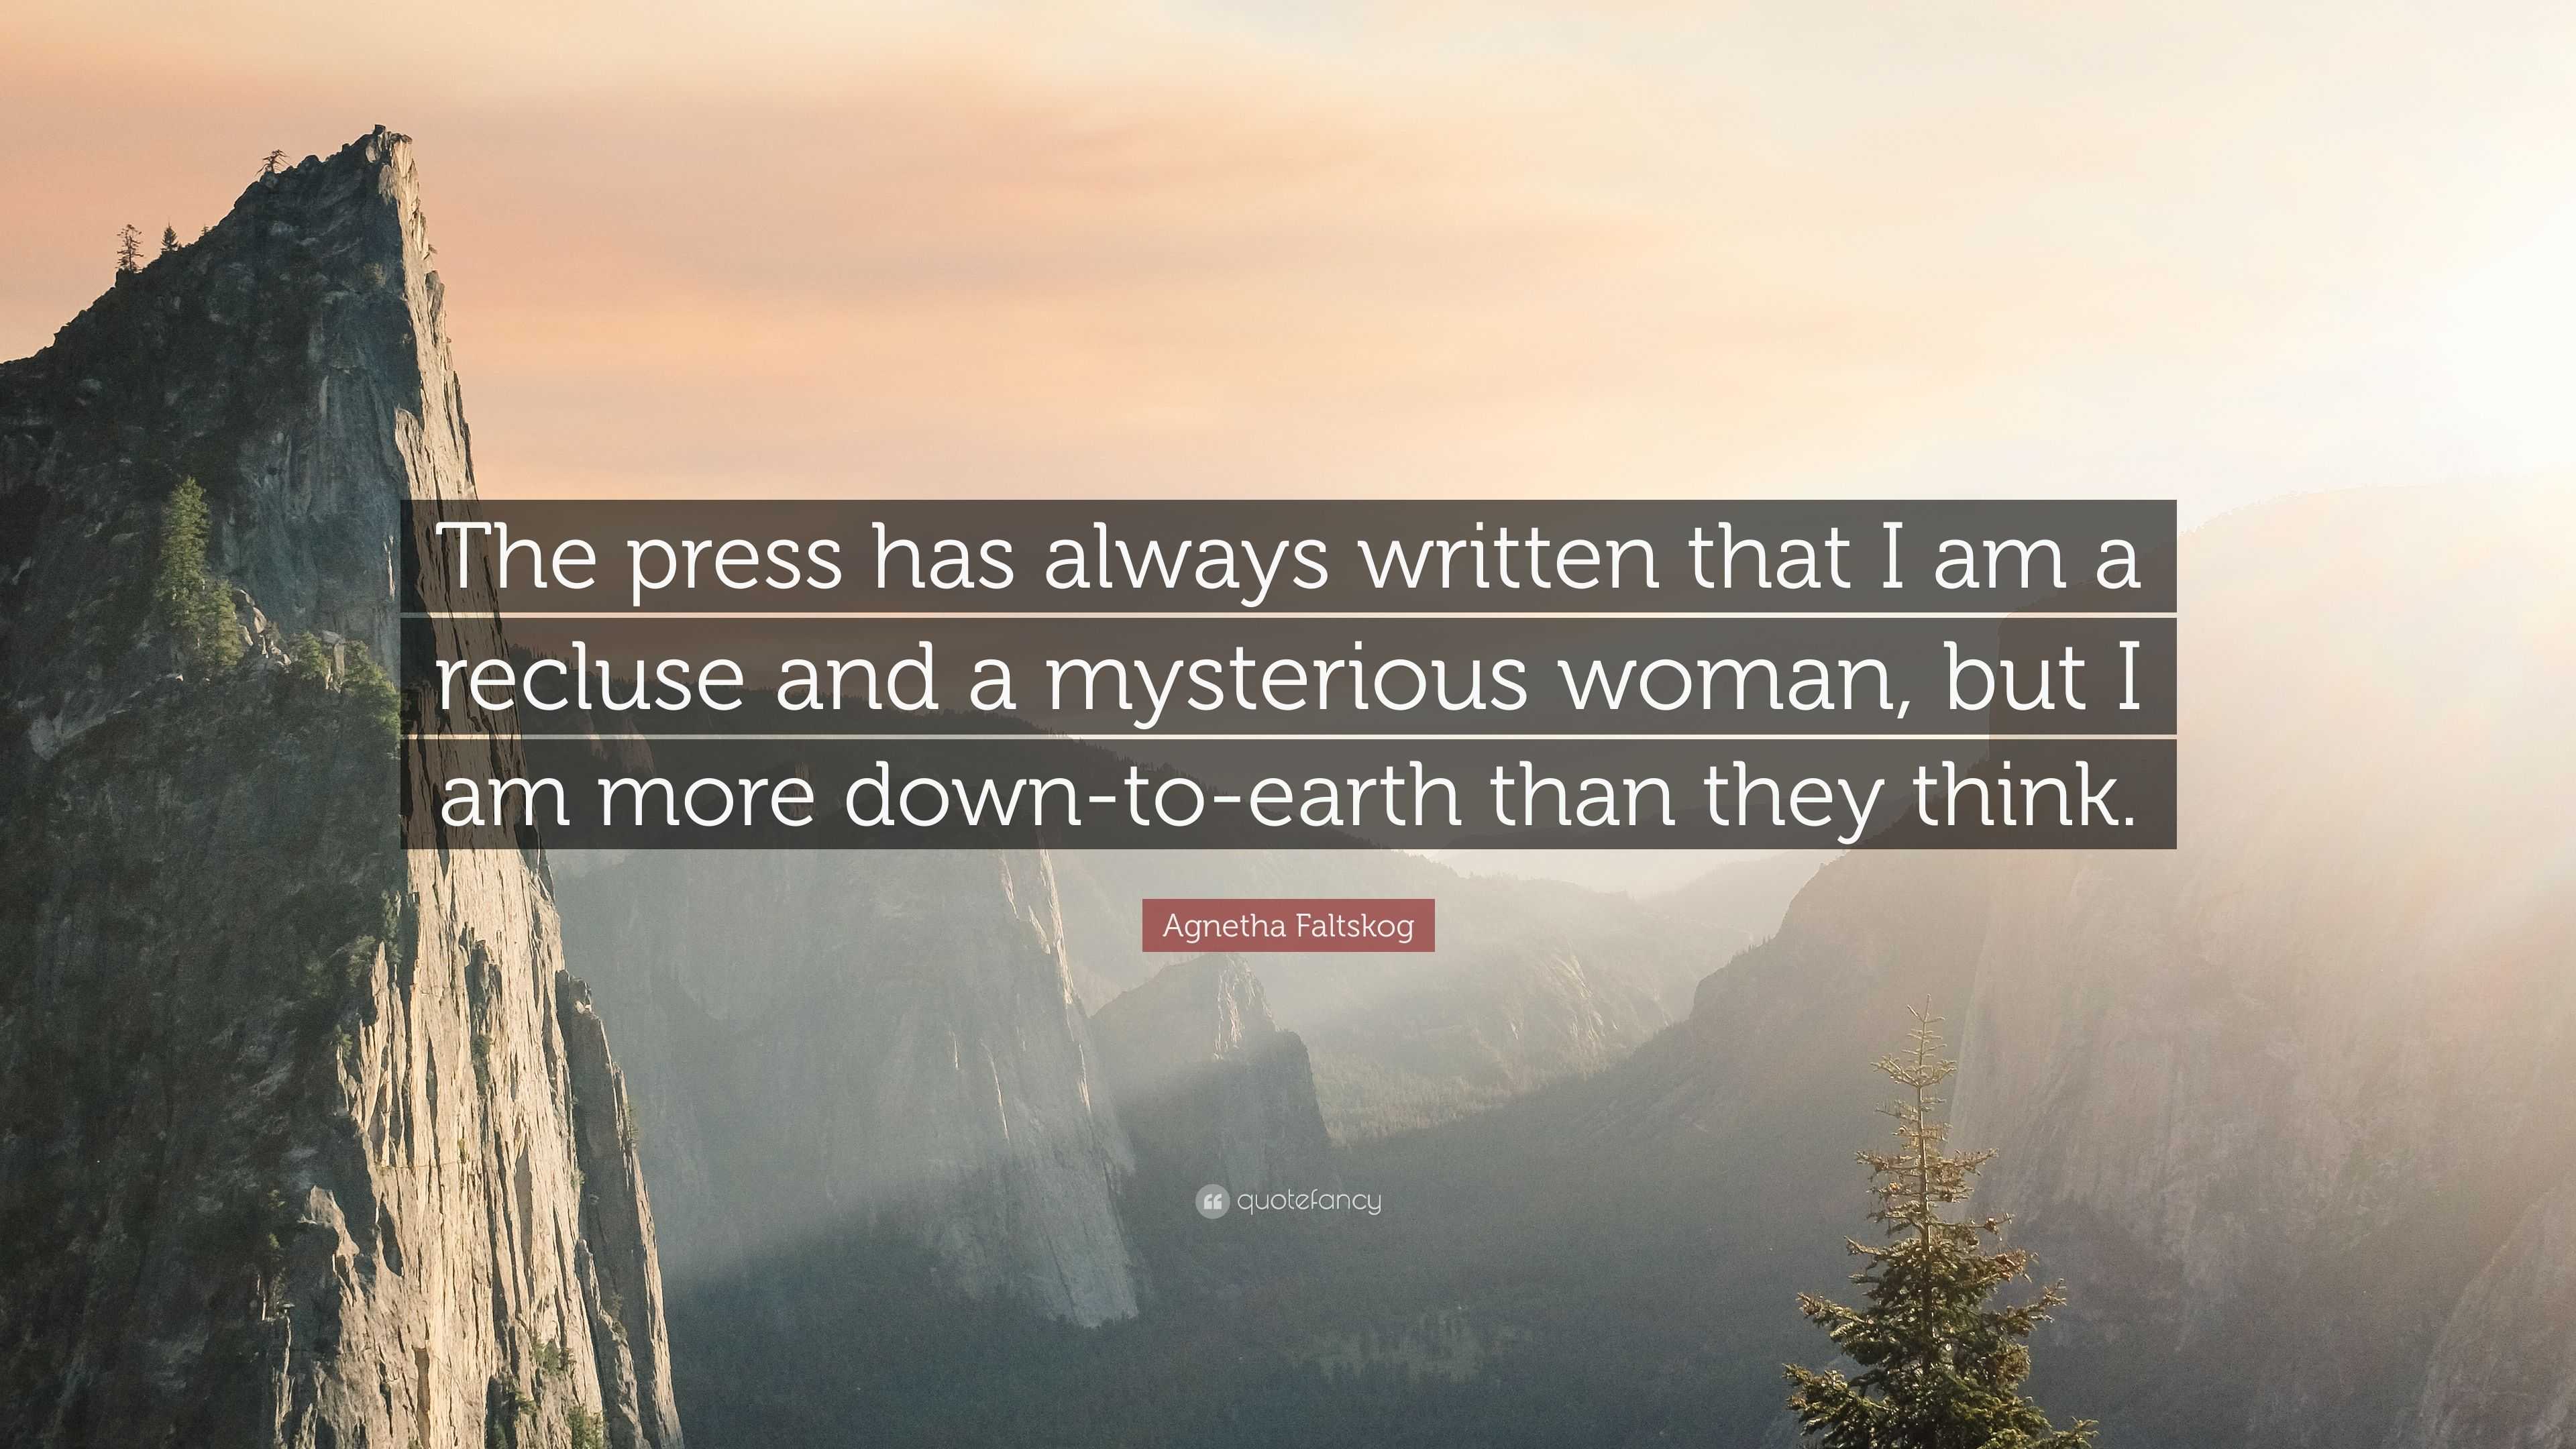 Agnetha Faltskog Quote: “The press has always written that I am a ...